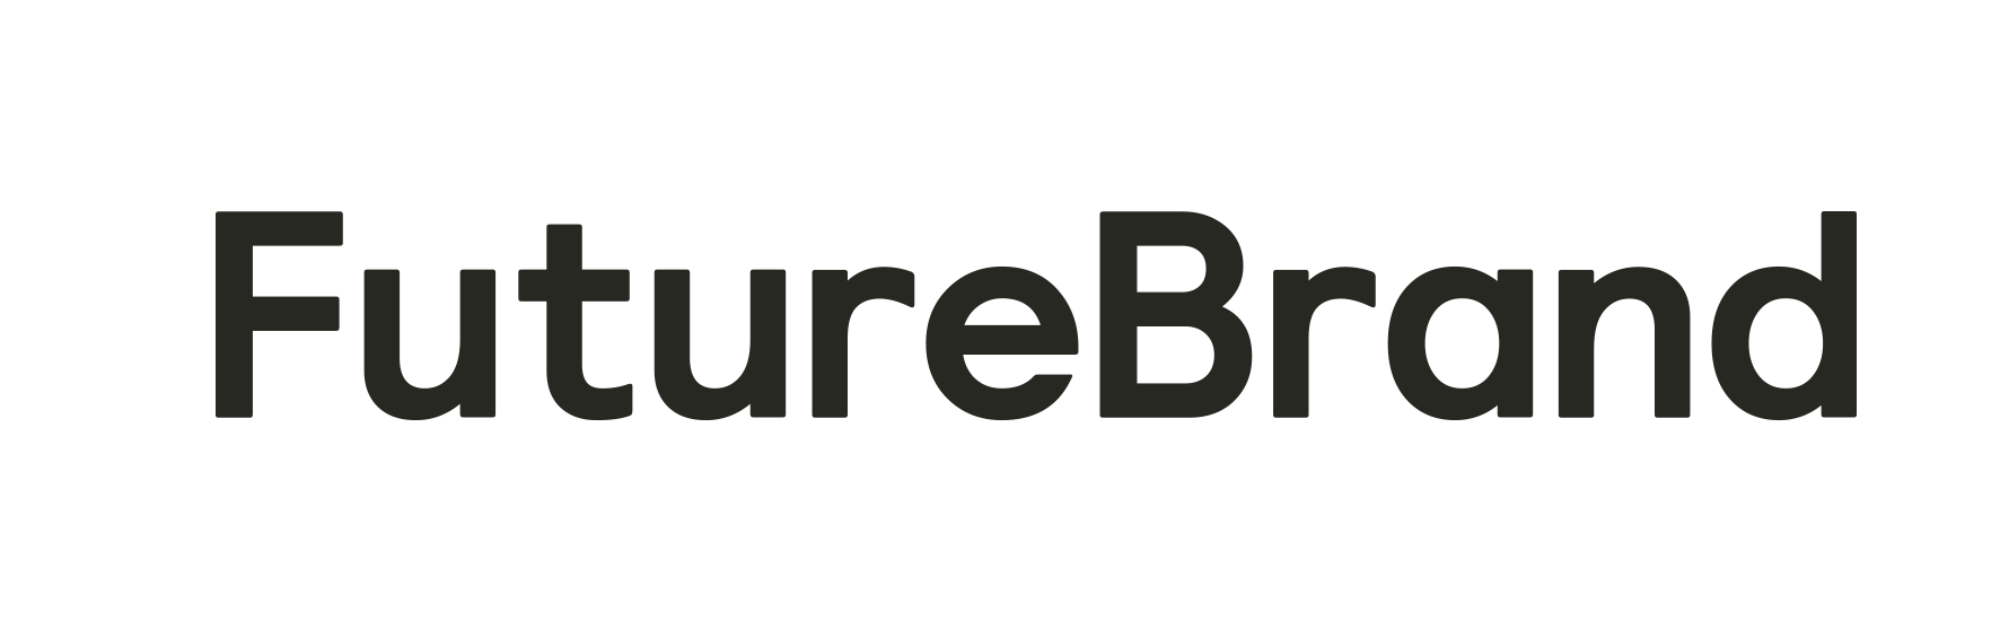 Spanish Shoe Company Brand Logo - FutureBrand: The Creative Future Company